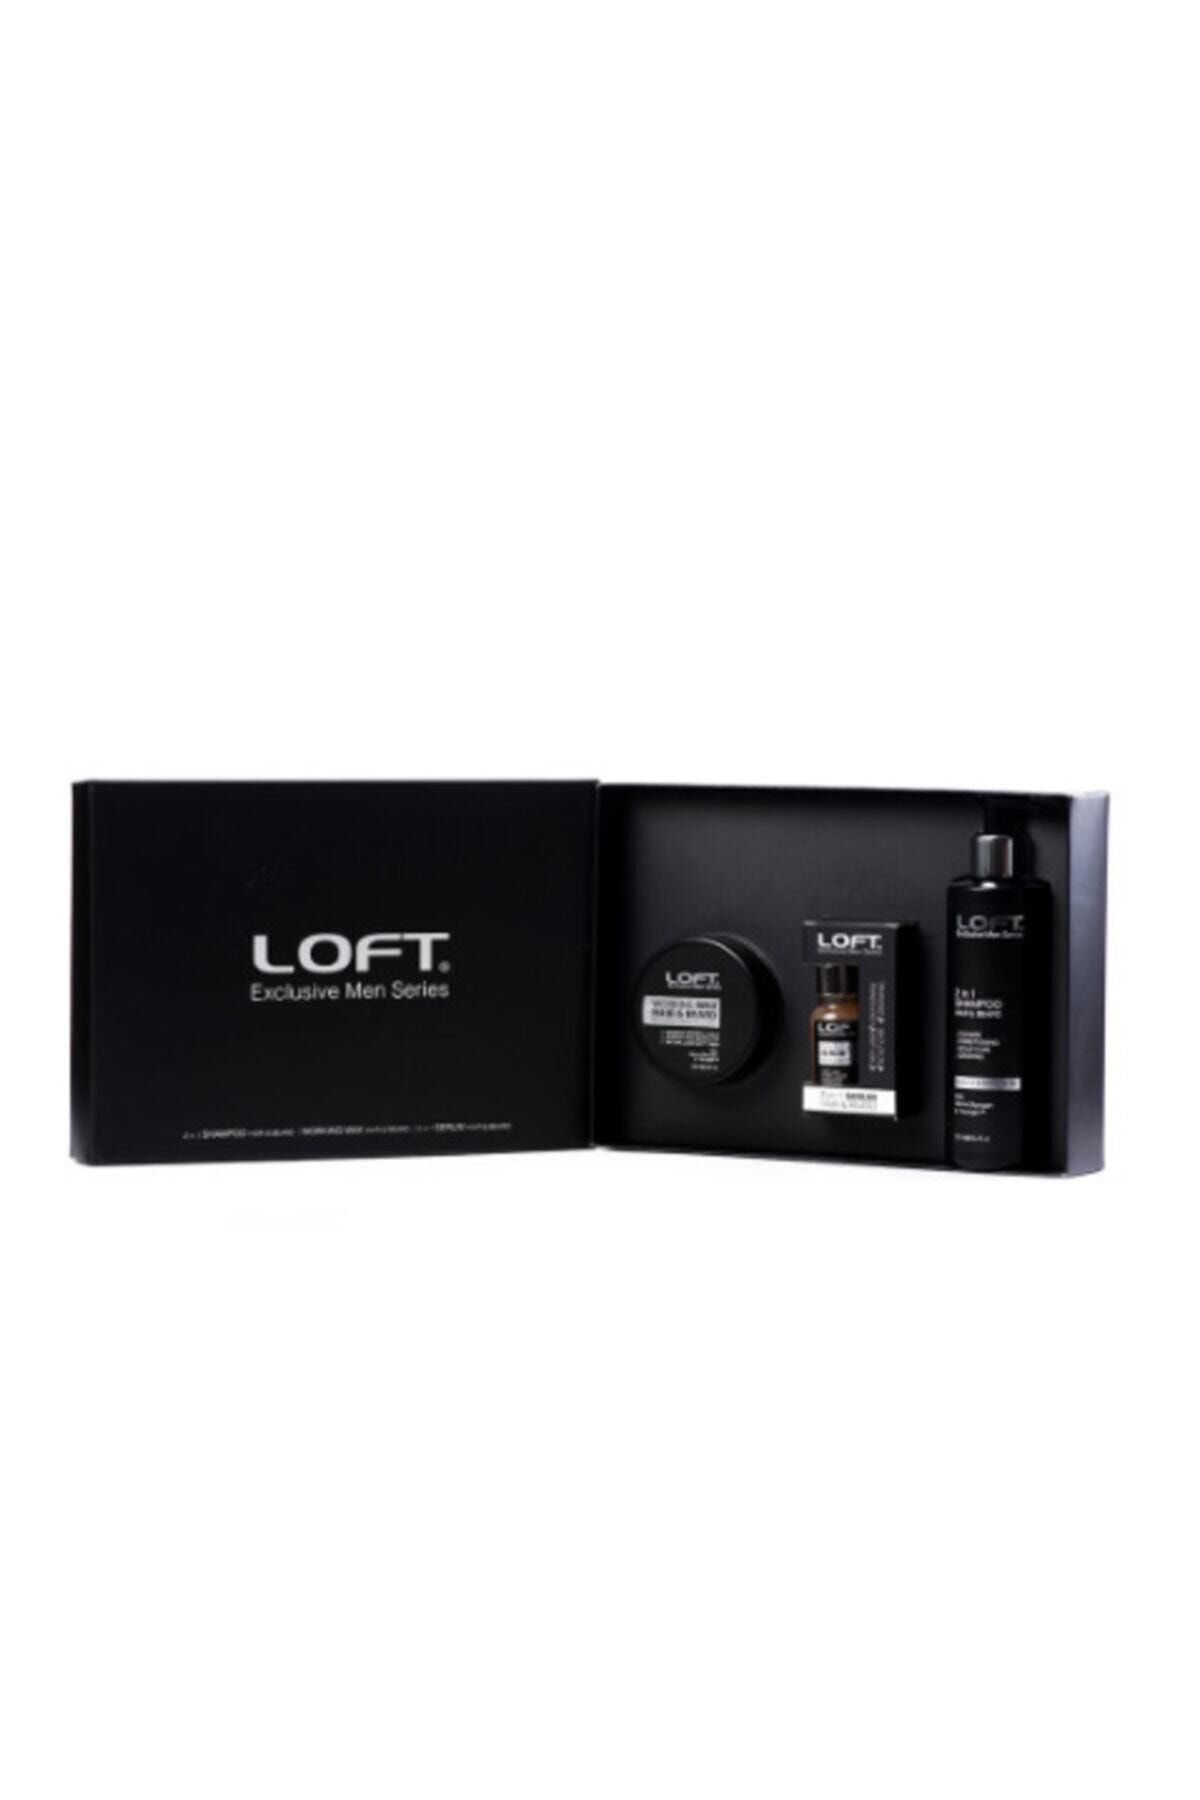 Loft Exclusive Men Series Gift Set Parabensiz Dökülme Karşıtı Şampuan + Serum + Maske